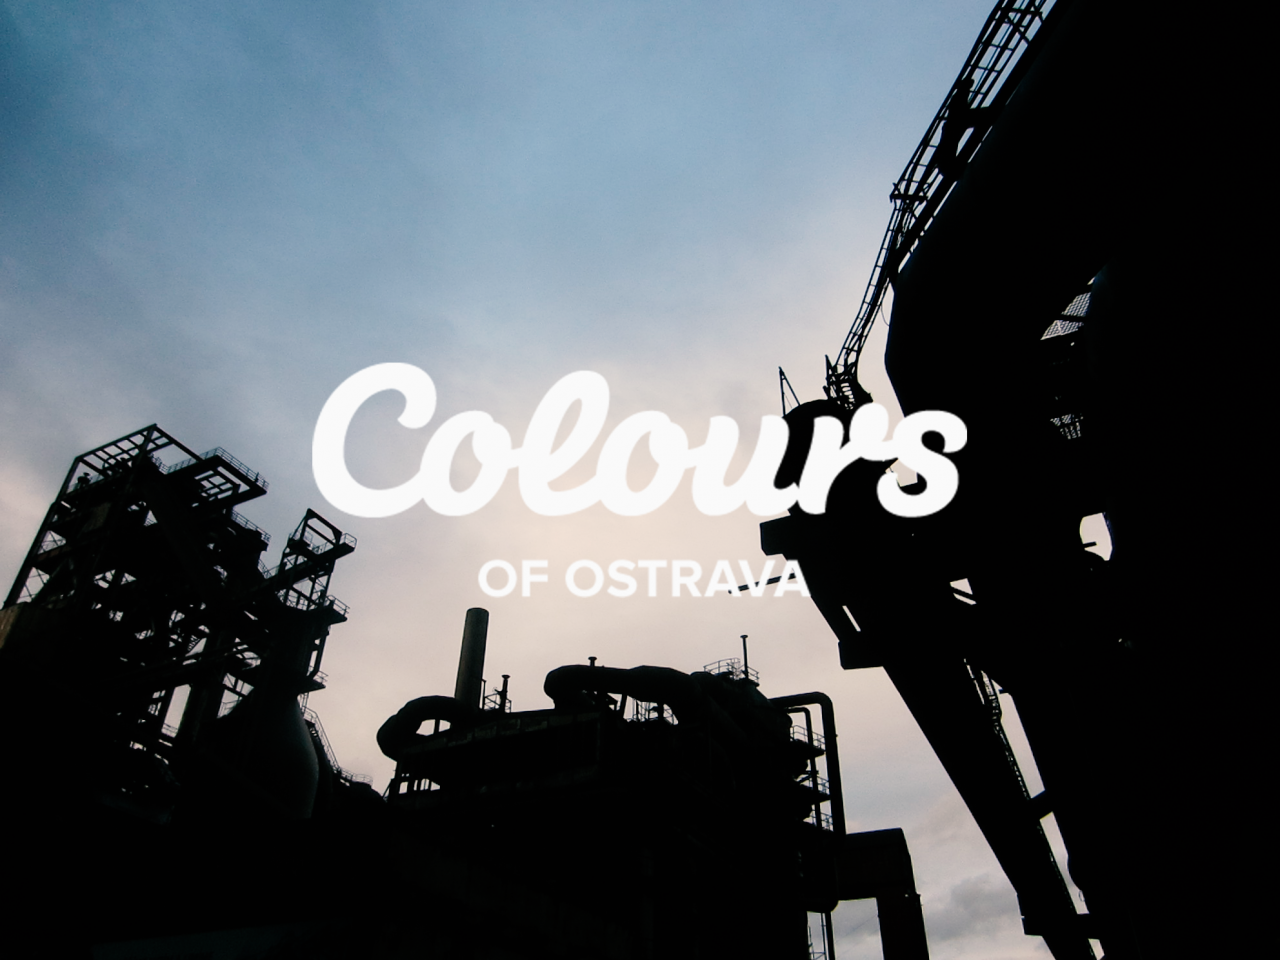 Colours Of Ostrava 2016